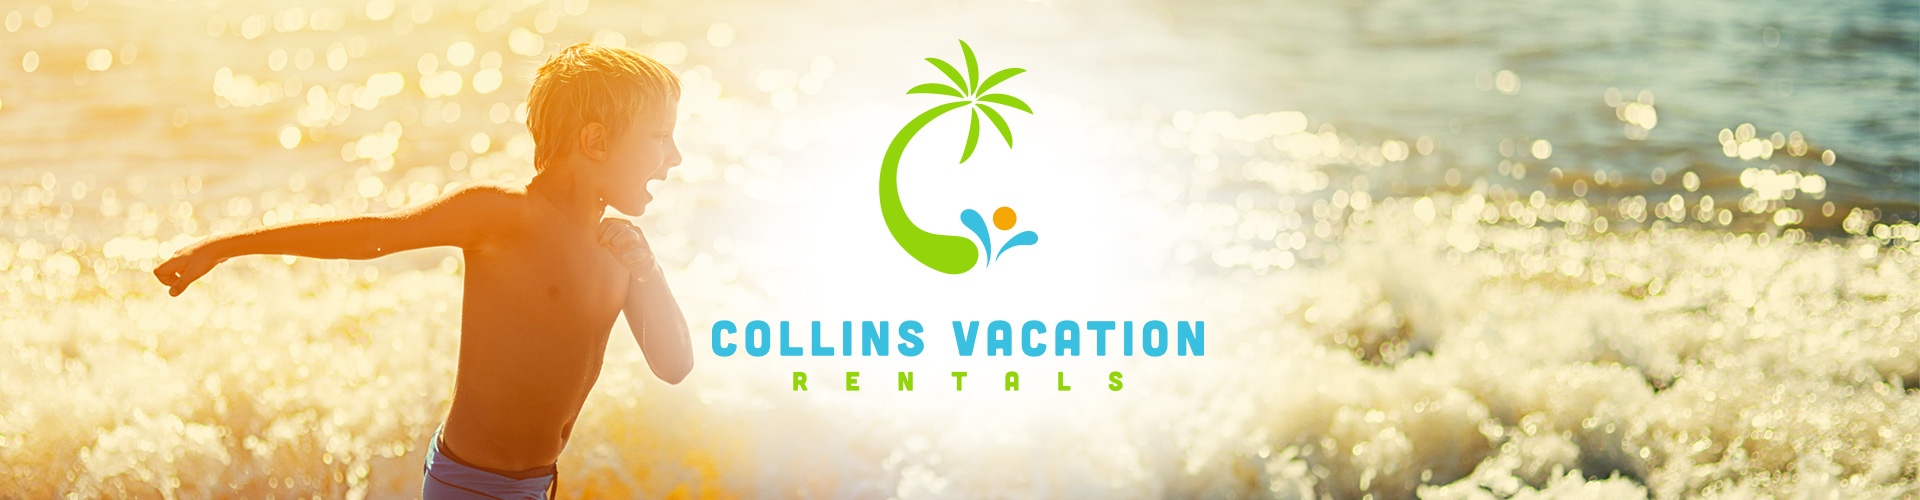 Collins Vacation Rentals Banner